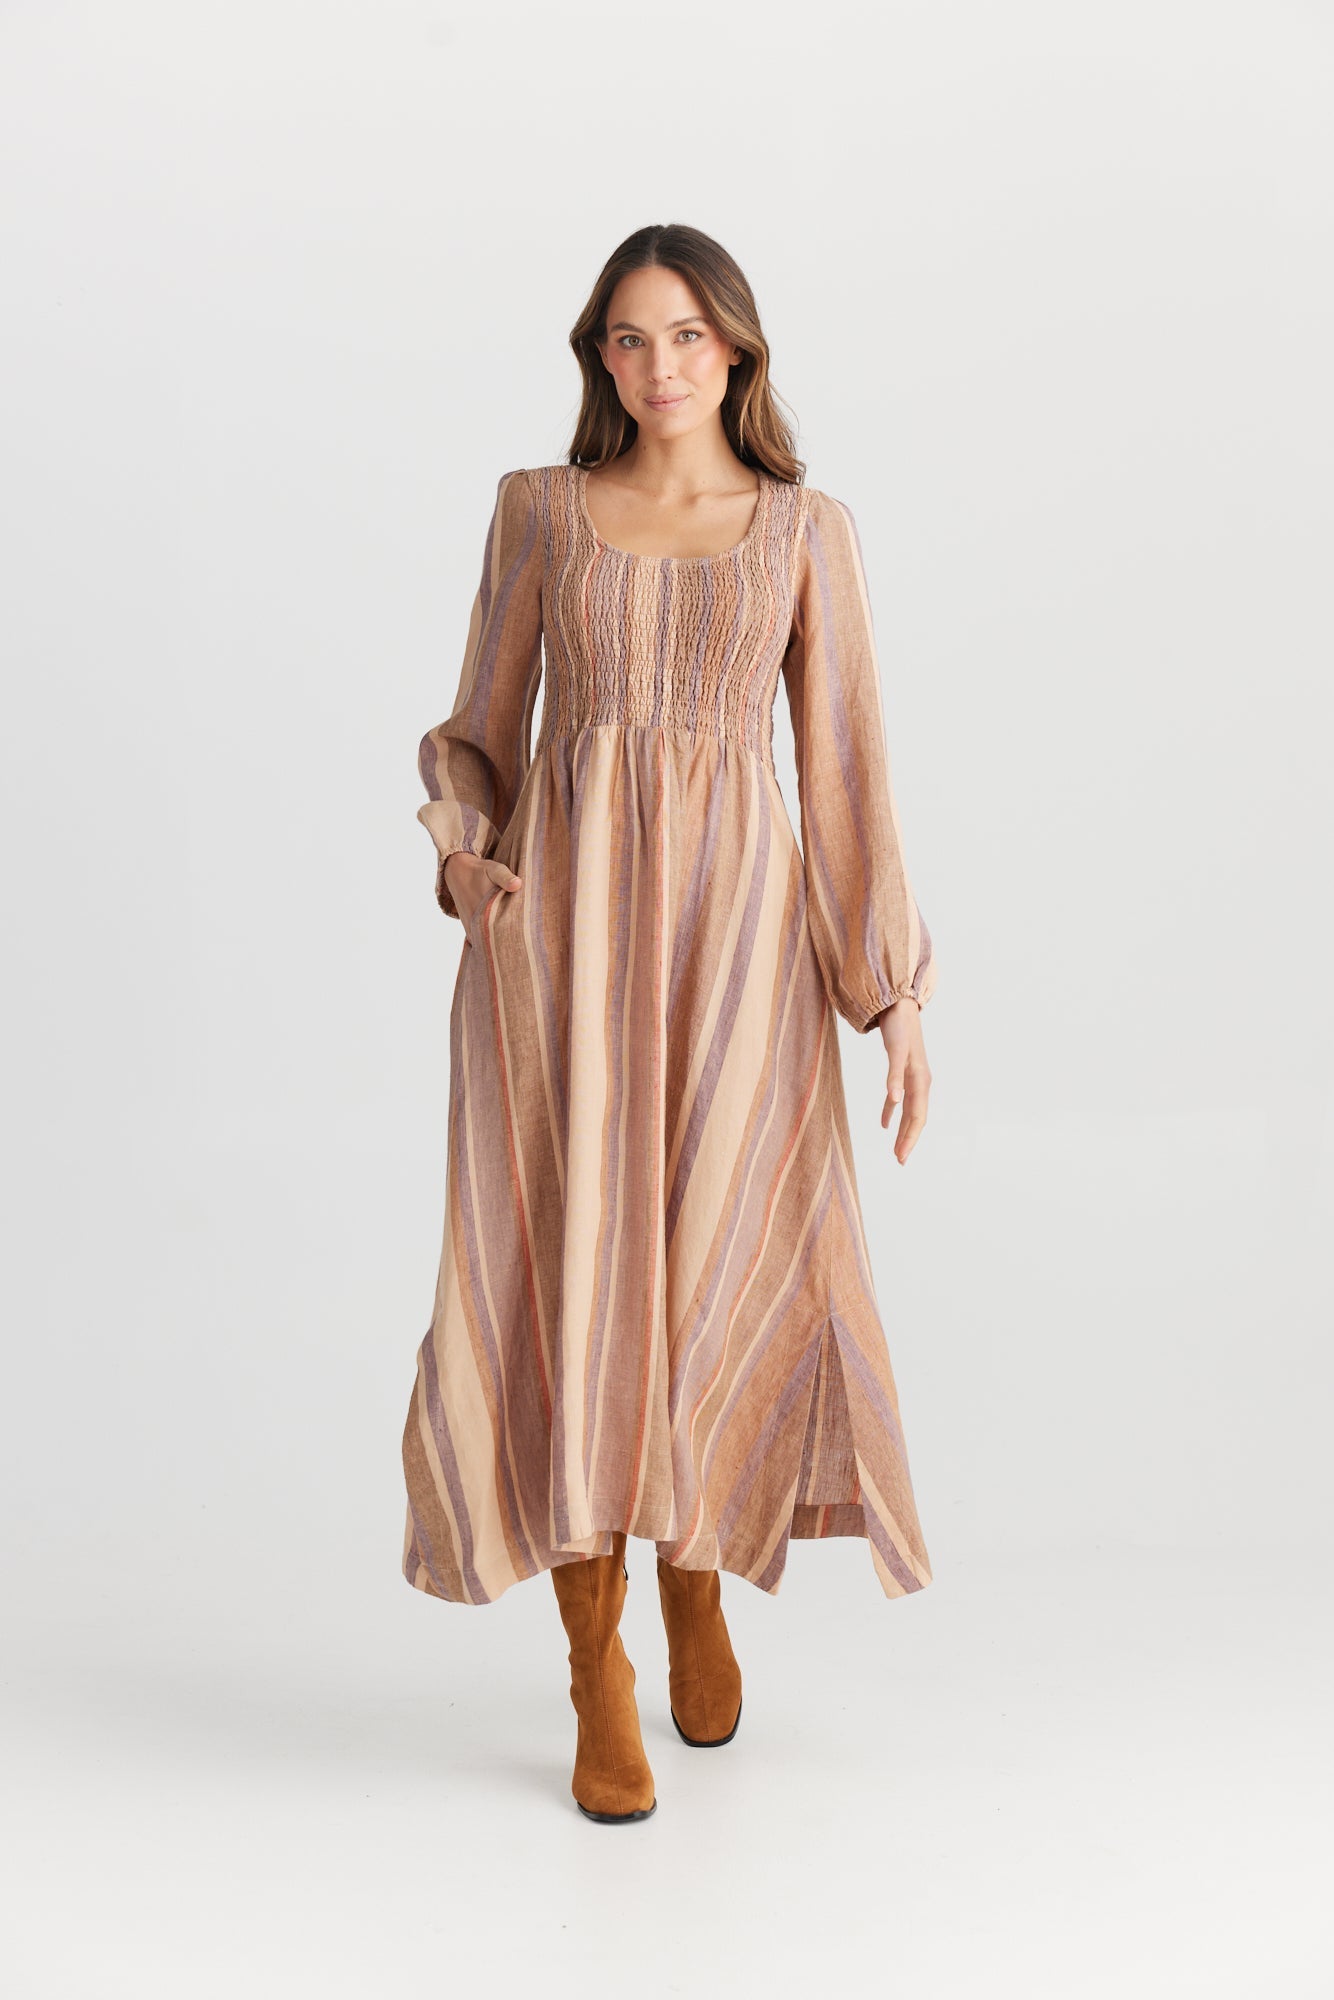 Francisco Dress - Santal Stripe-Dresses-The Shanty Corporation-The Bay Room